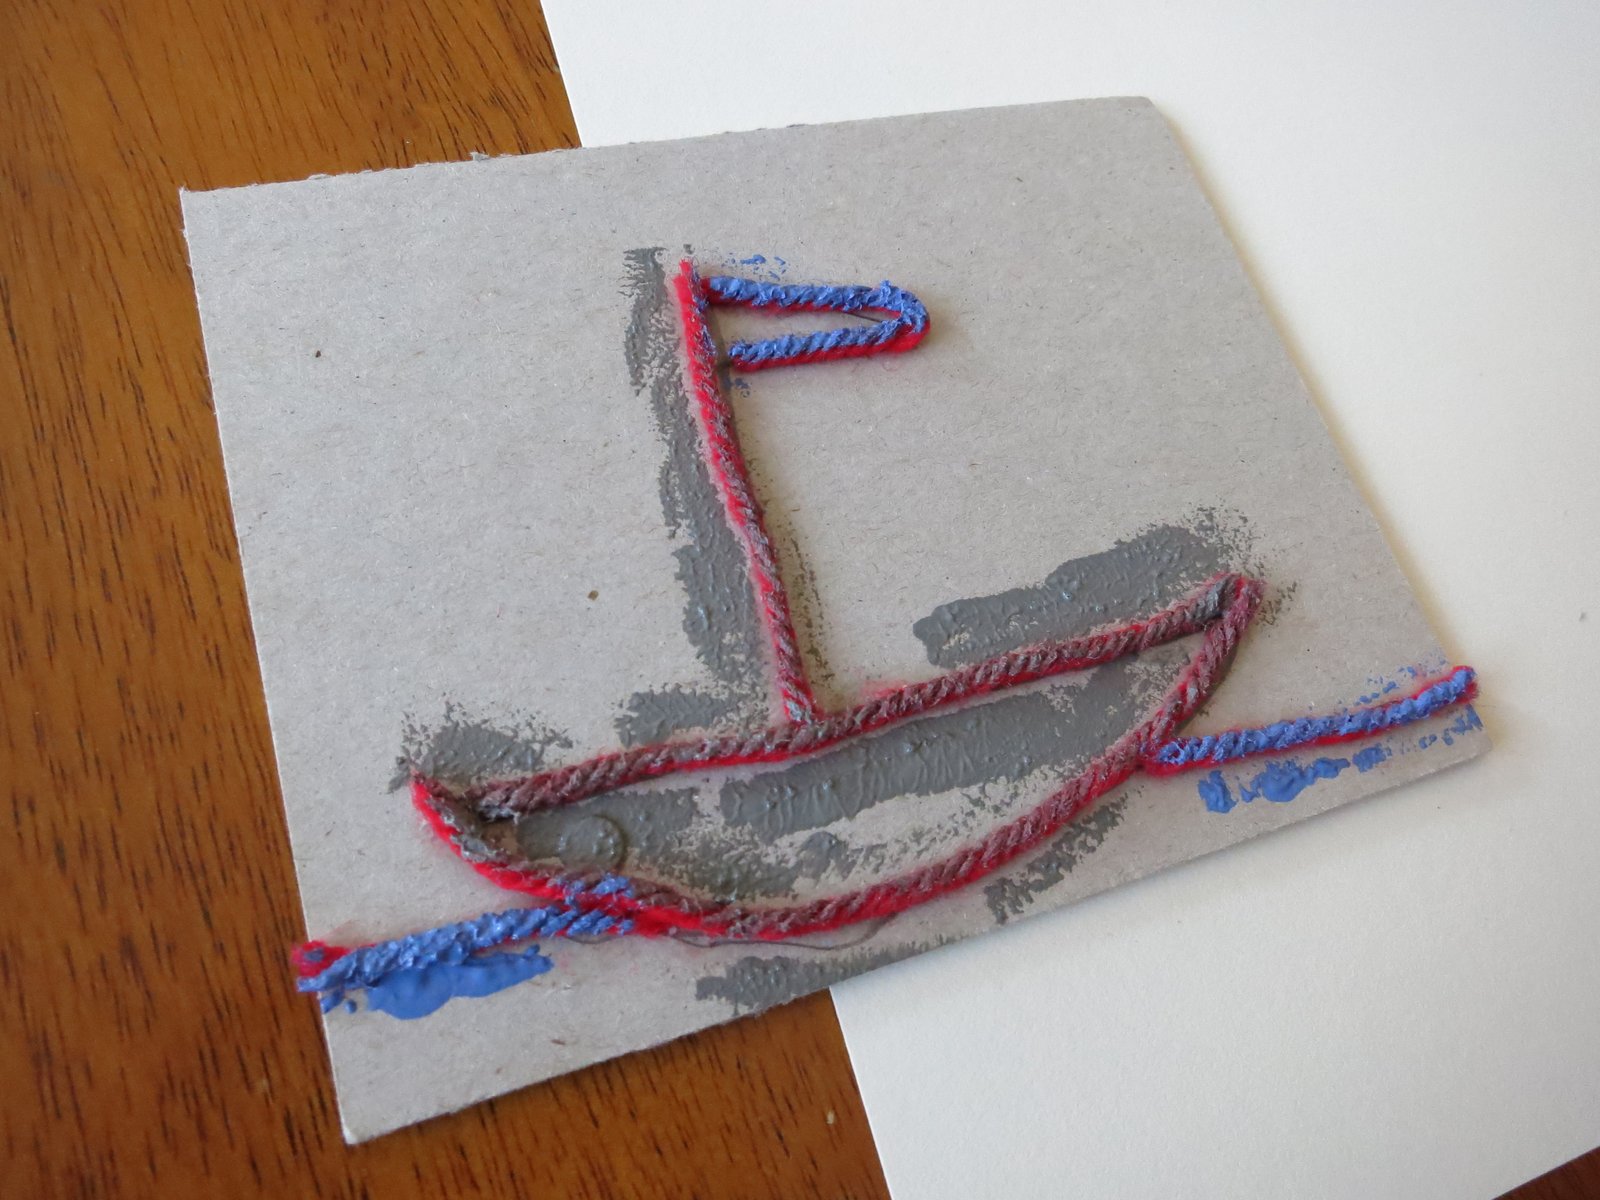 Alphabet Stamp made with Craft Foam 